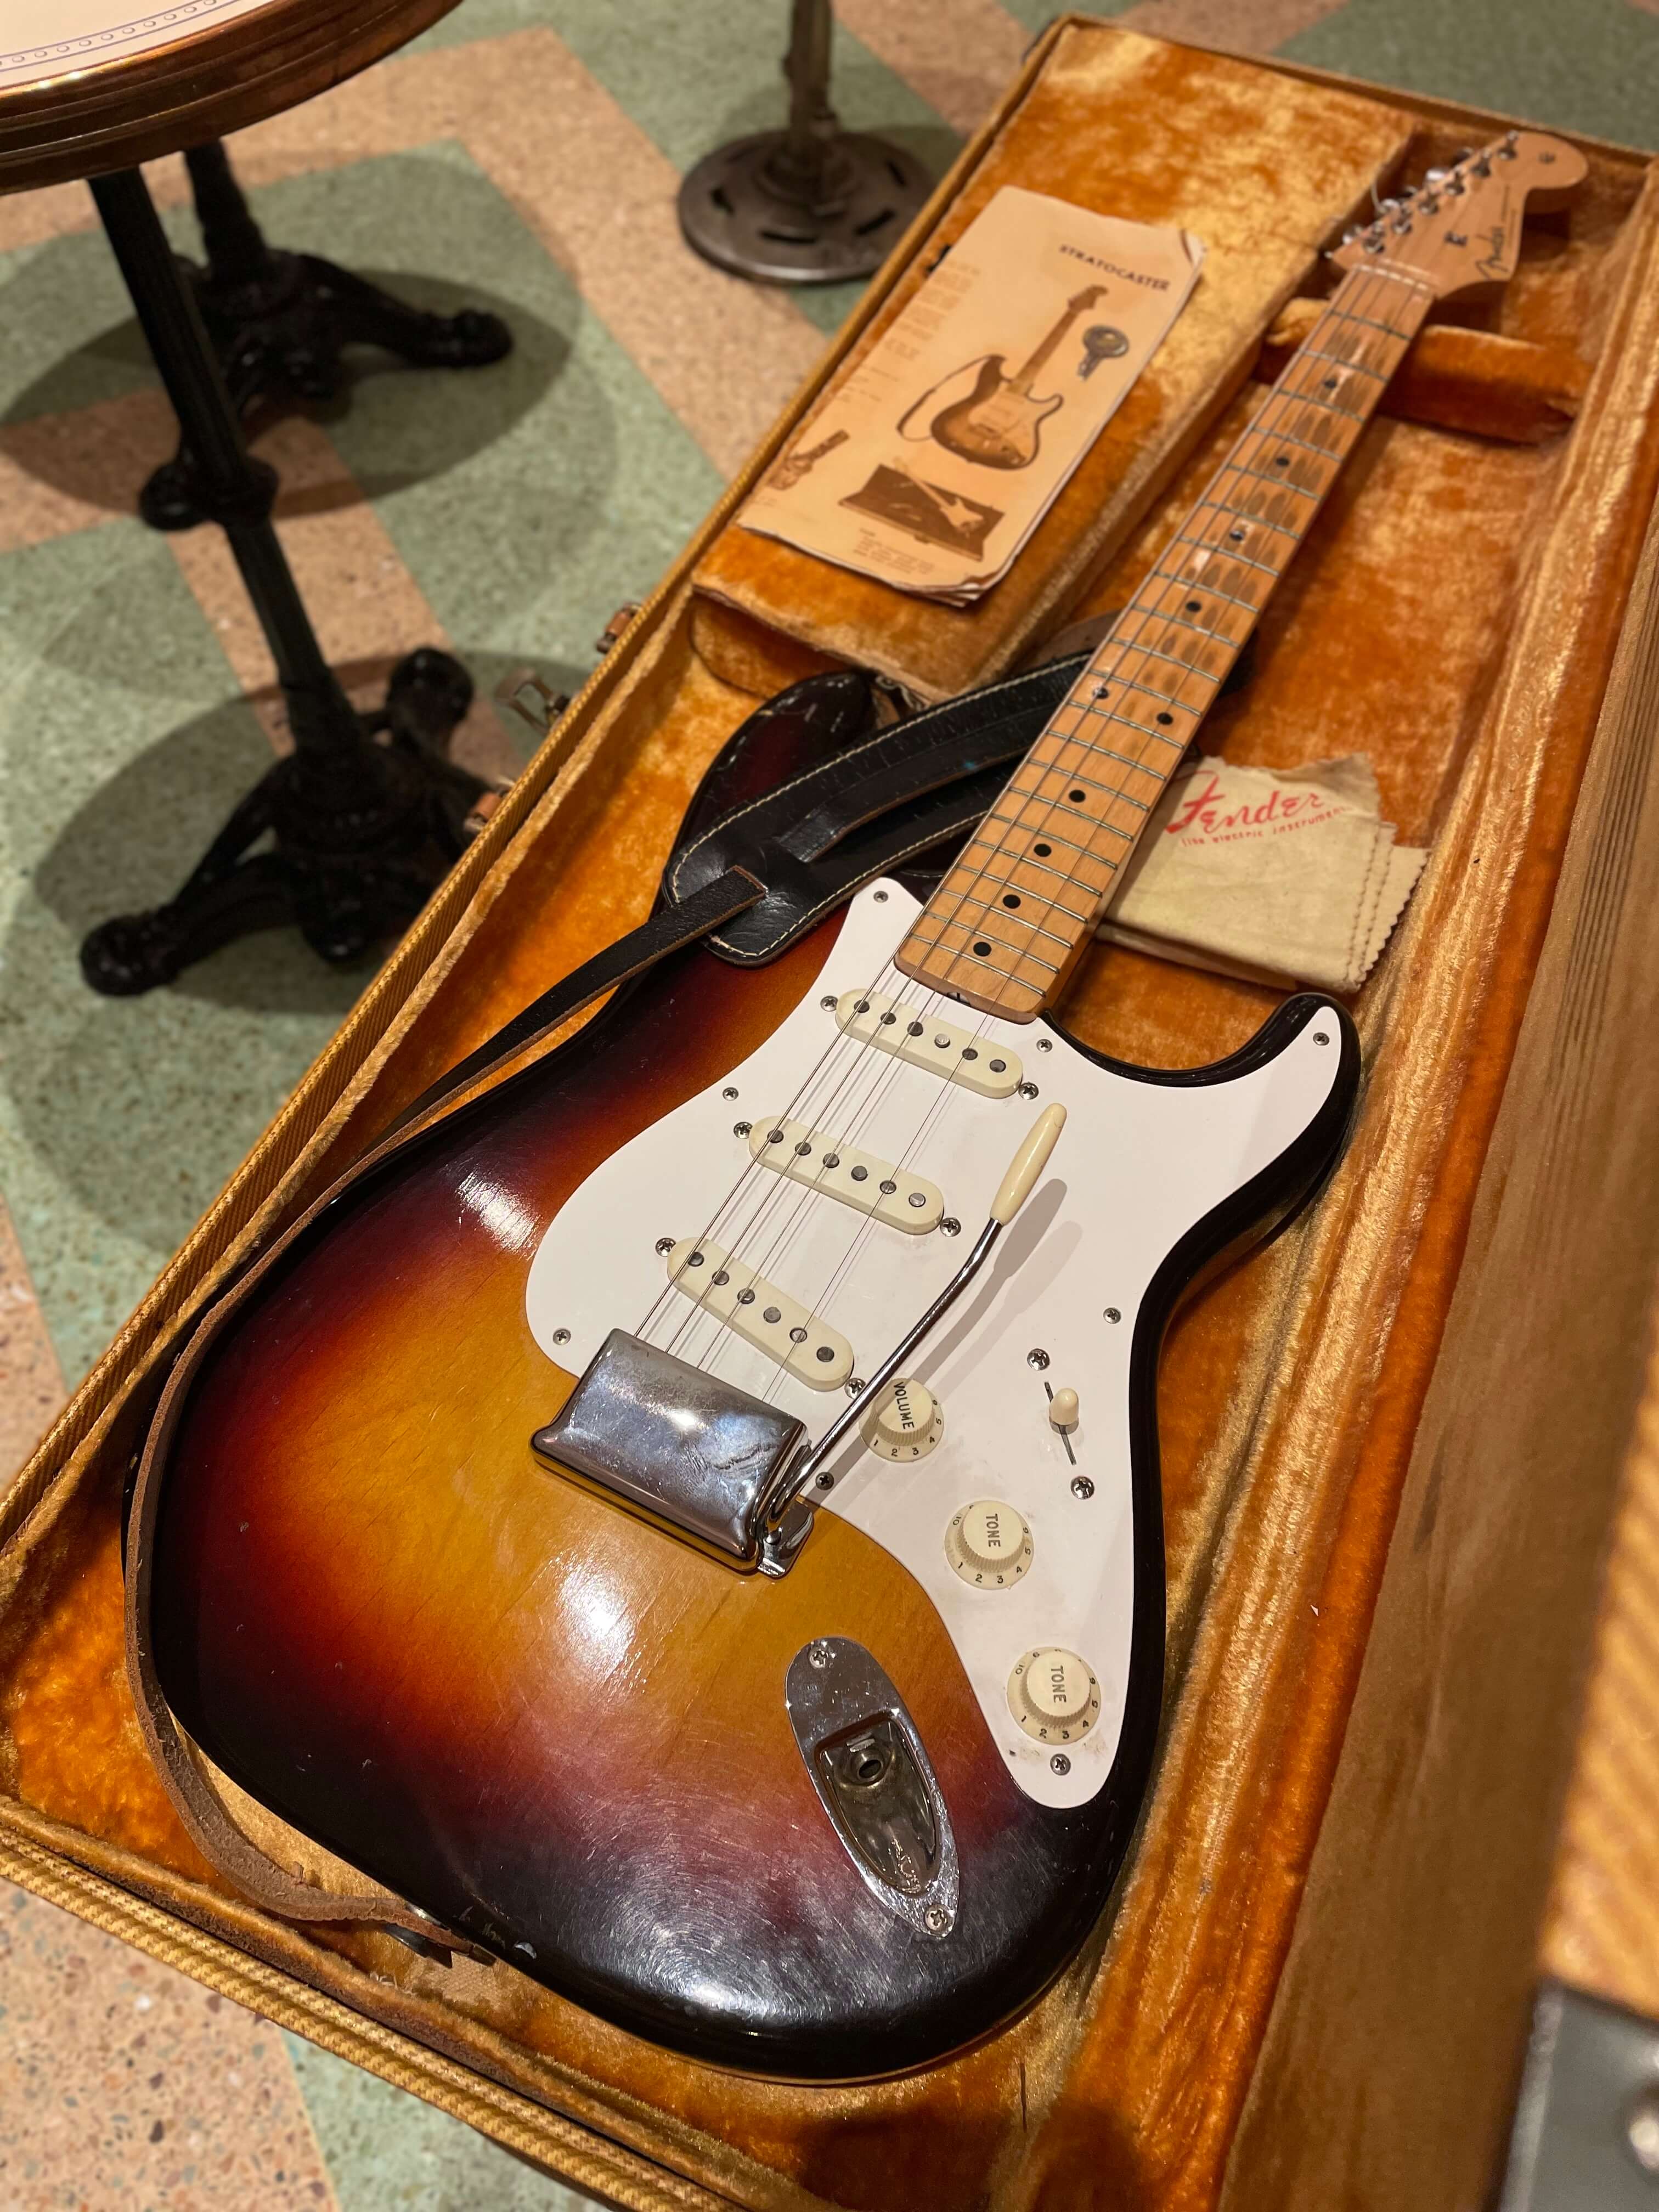 Fender guitar collector buys 1958 Fender Stratocaster